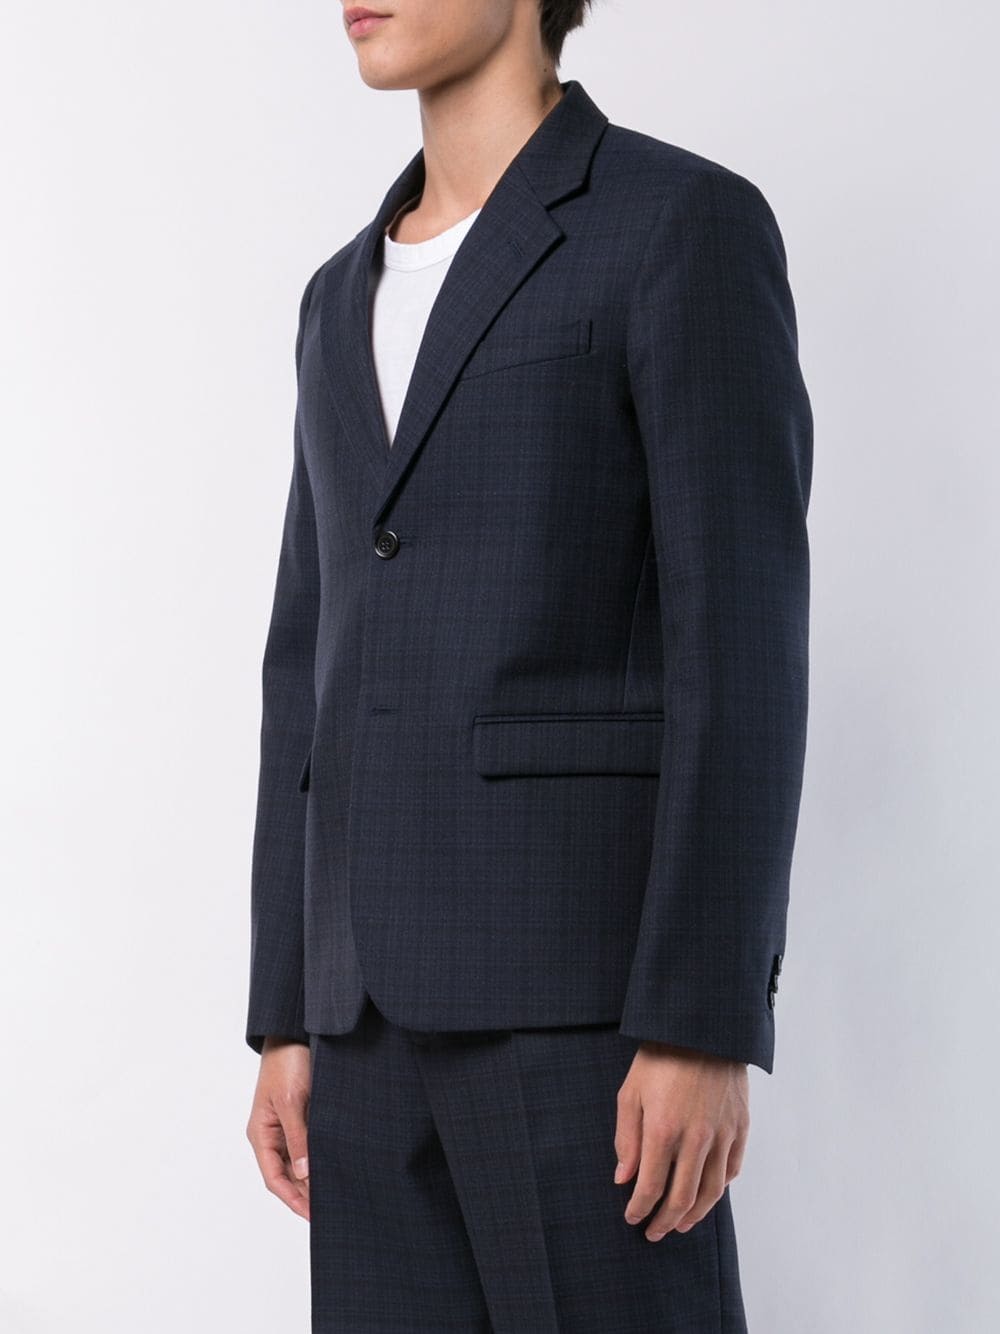 Marni Checked Suit Jacket, $740 | farfetch.com | Lookastic